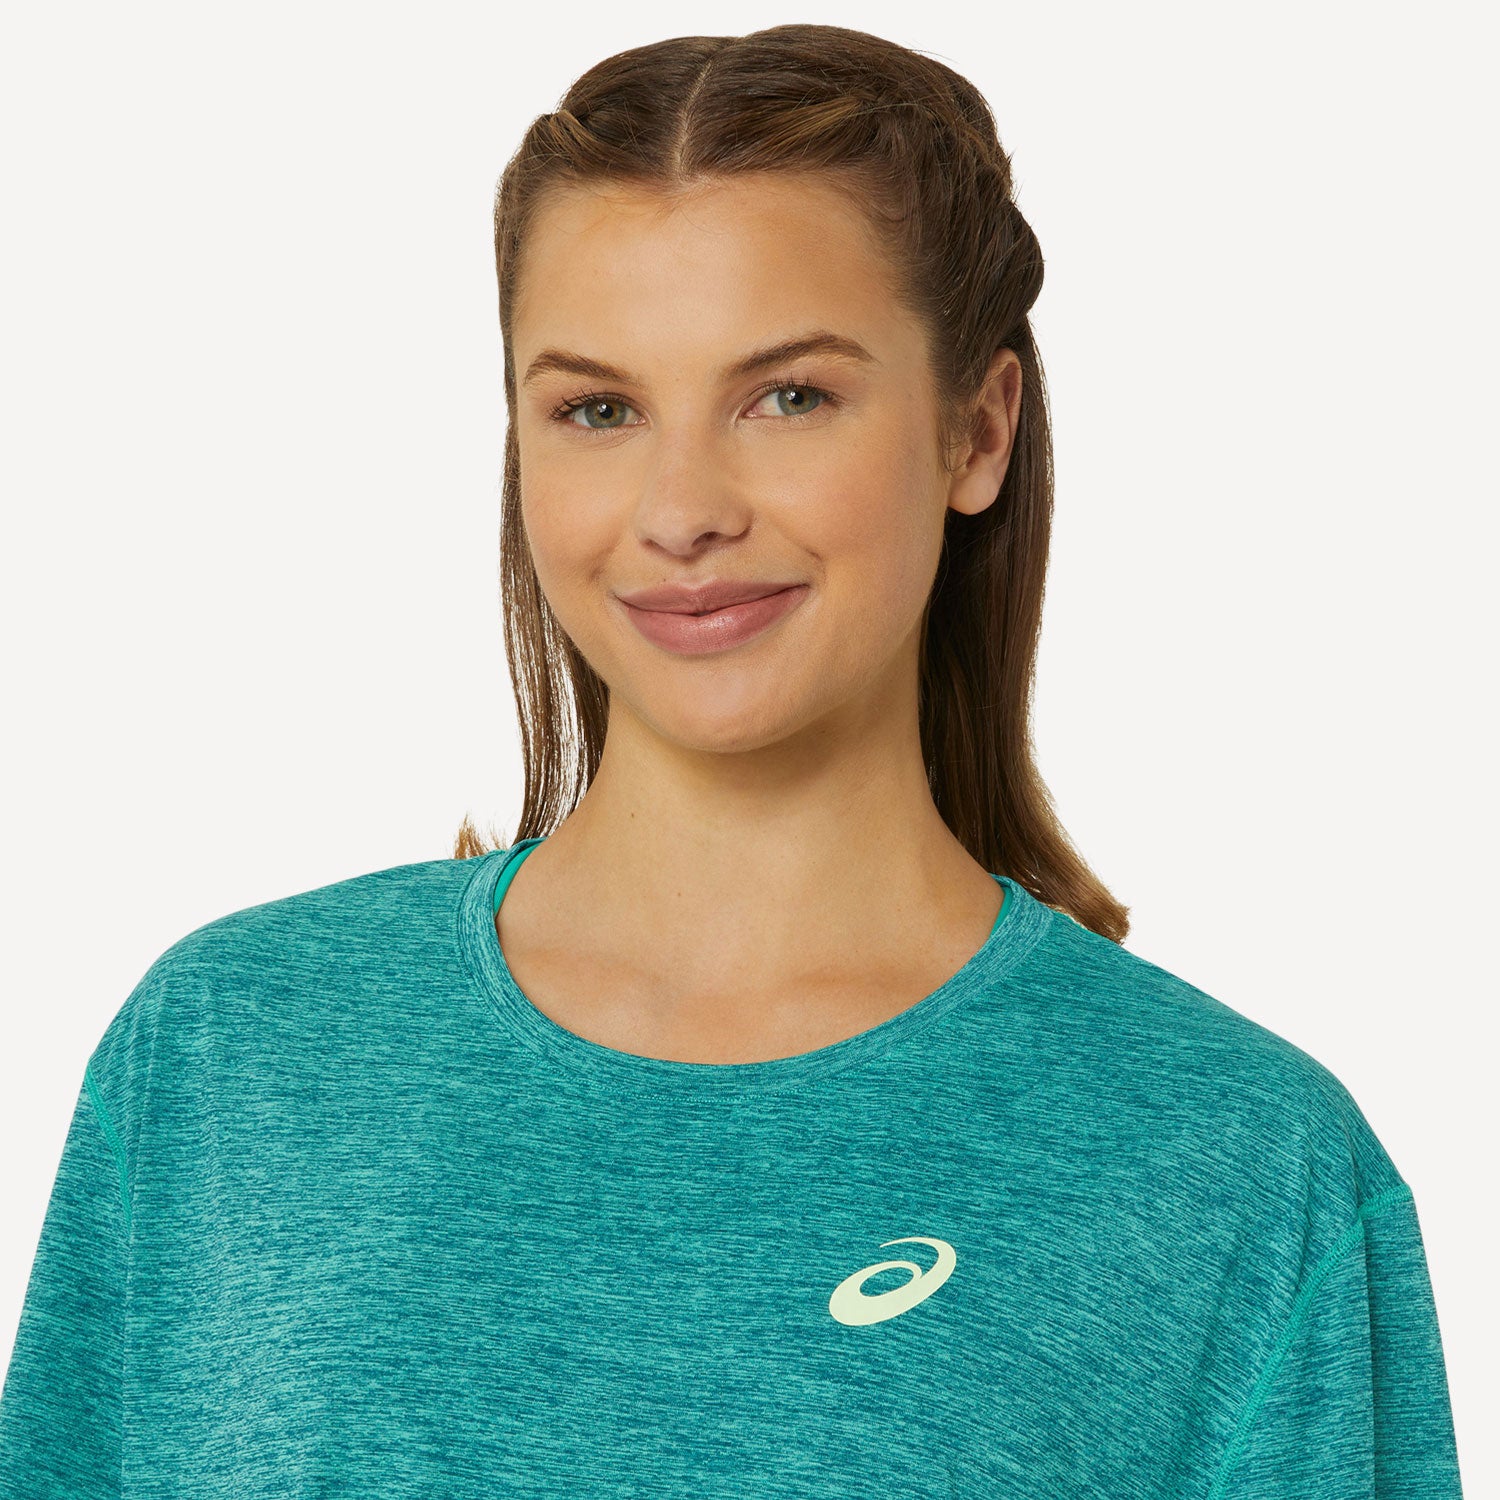 ASICS Nagino Women's Loose Tennis Shirt - Green (4)